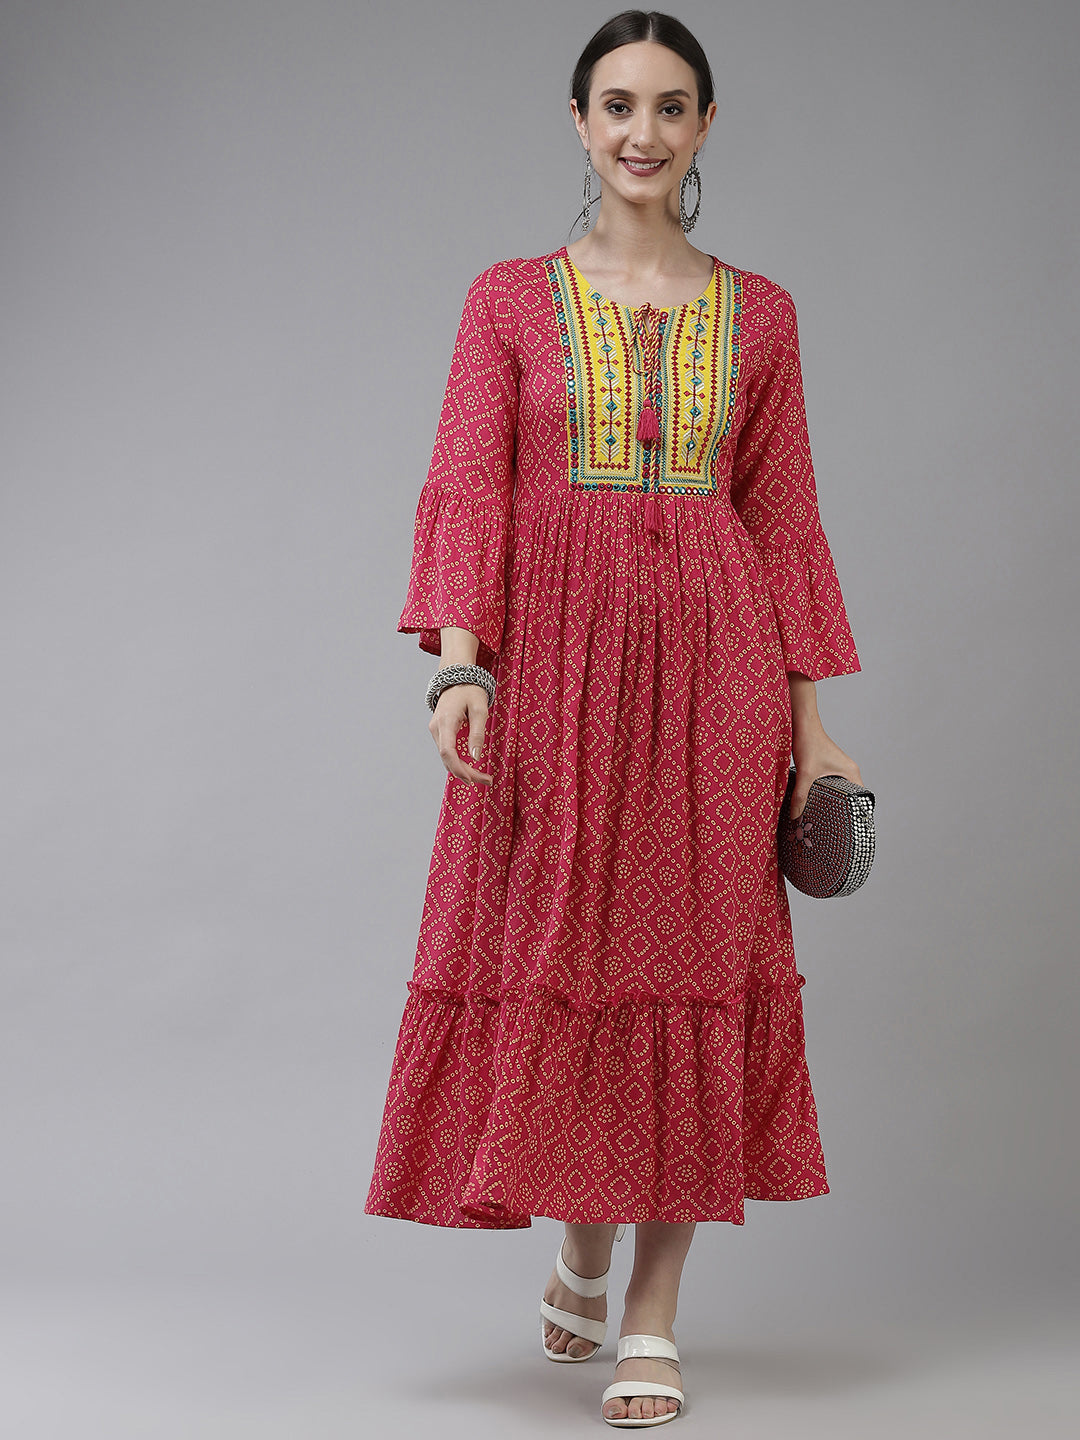 Pink & Yellow Ethnic Motifs Ethnic Dress